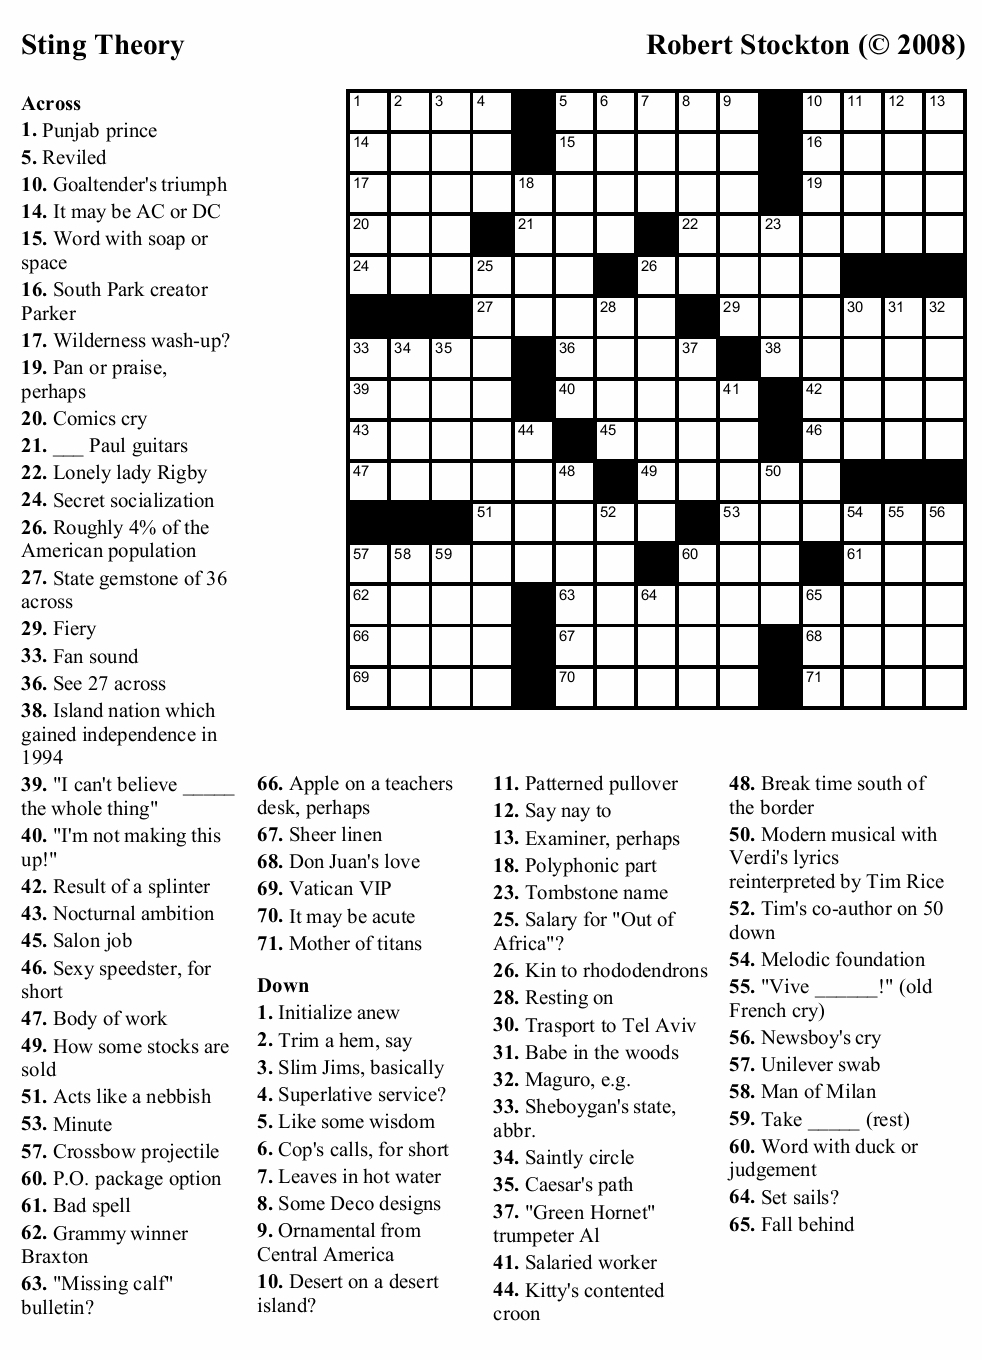 nytimes crossword puzzle